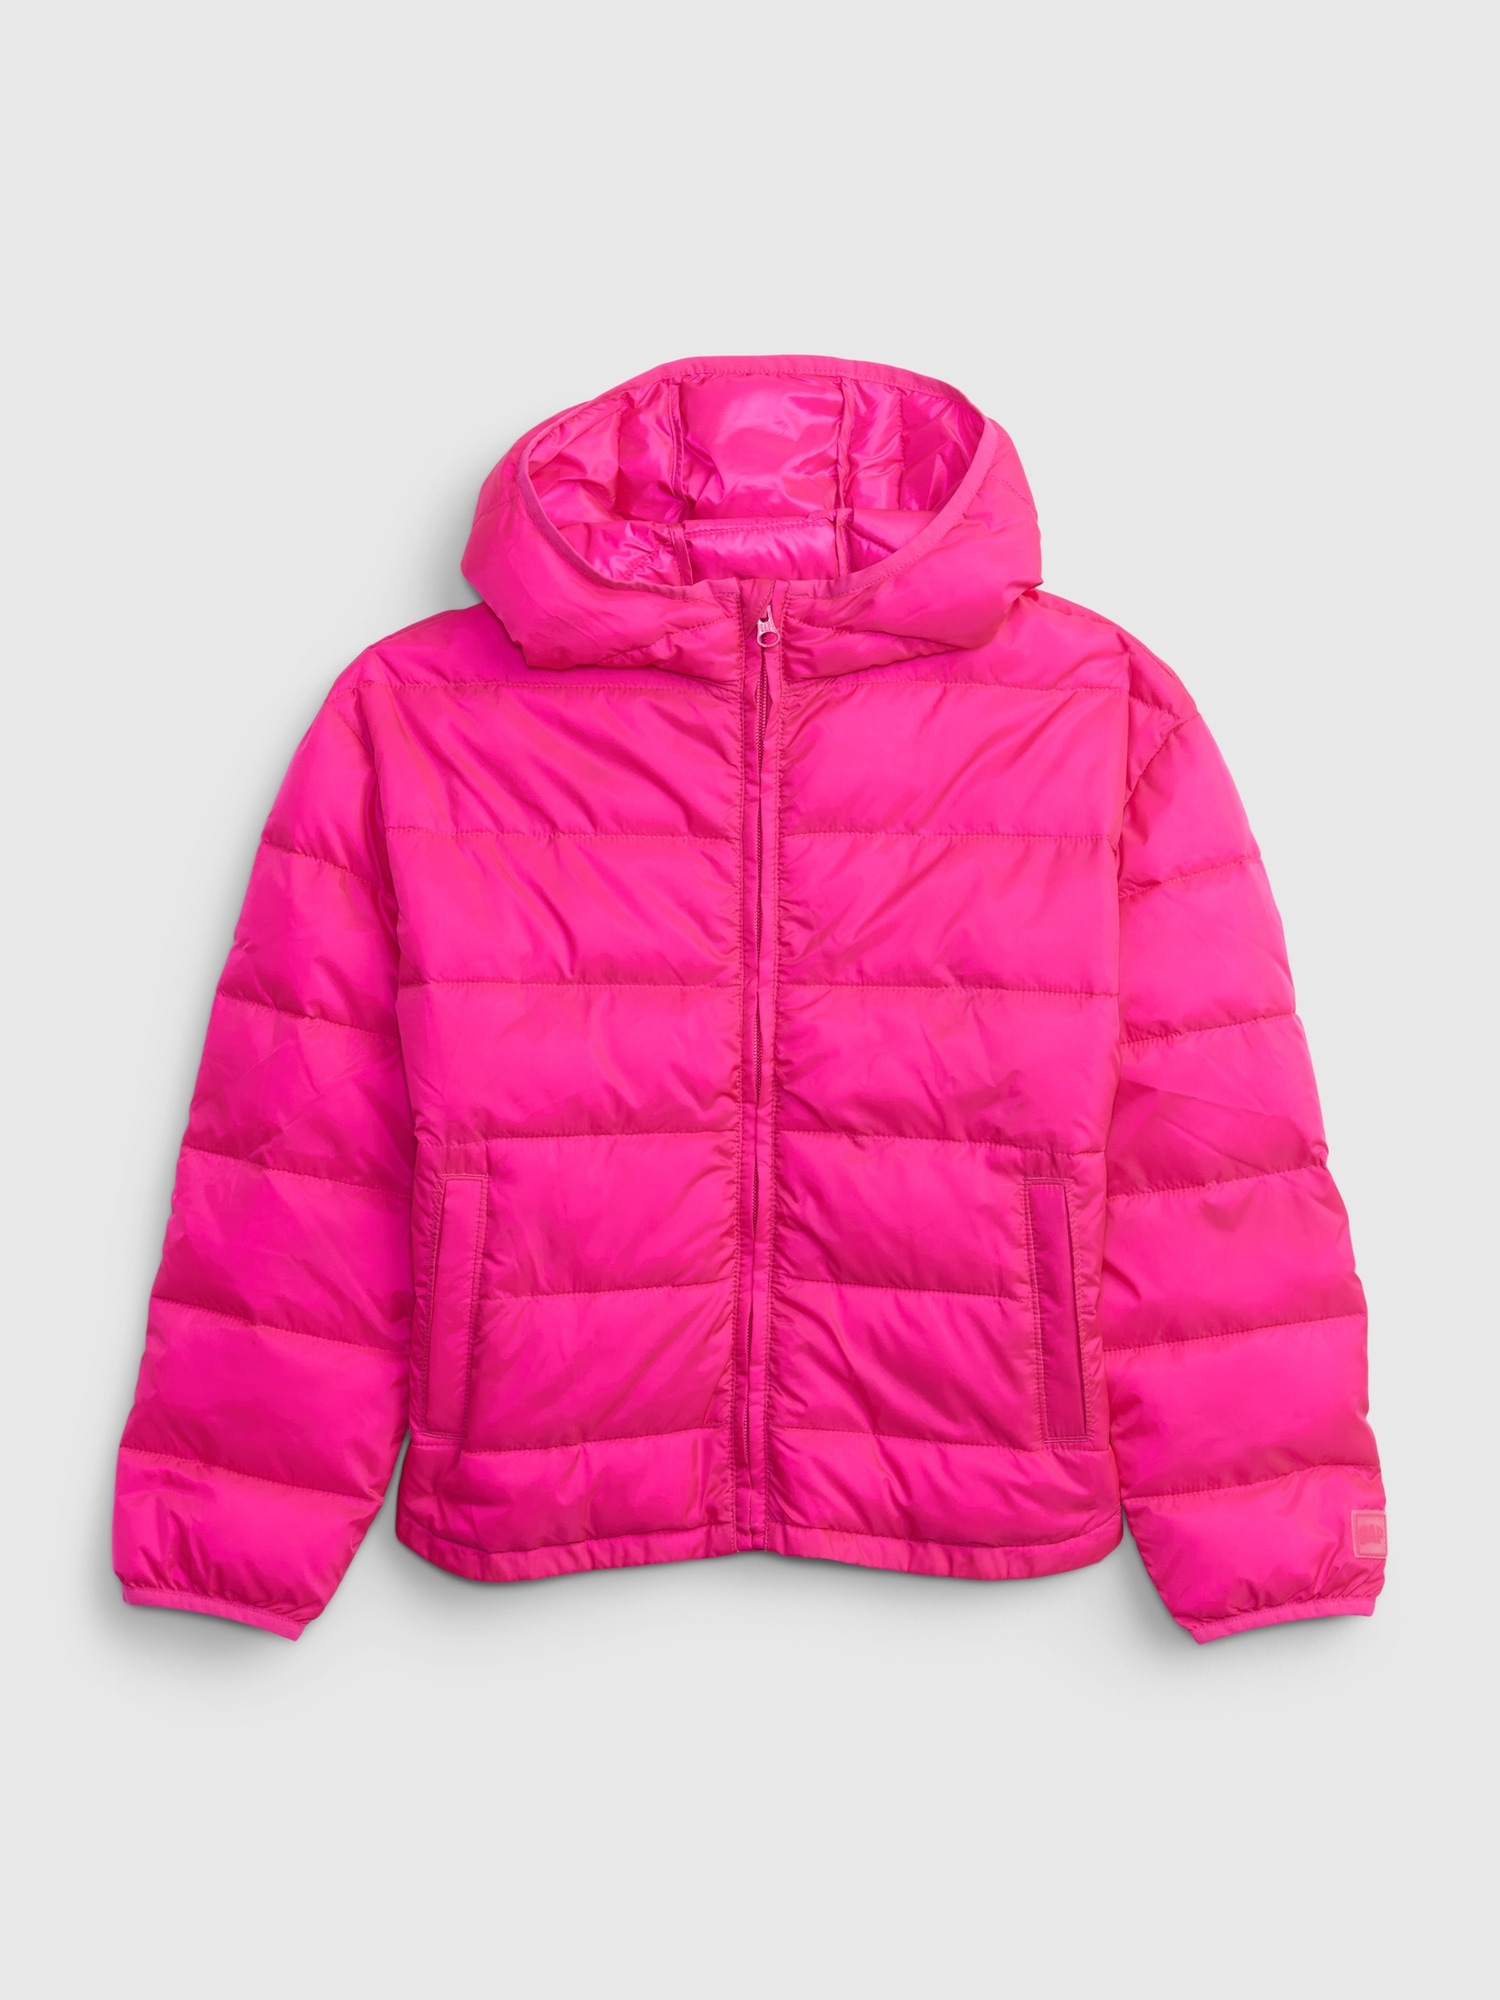 Gap Kids 100% Recycled Lightweight Puffer Jacket pink. 1